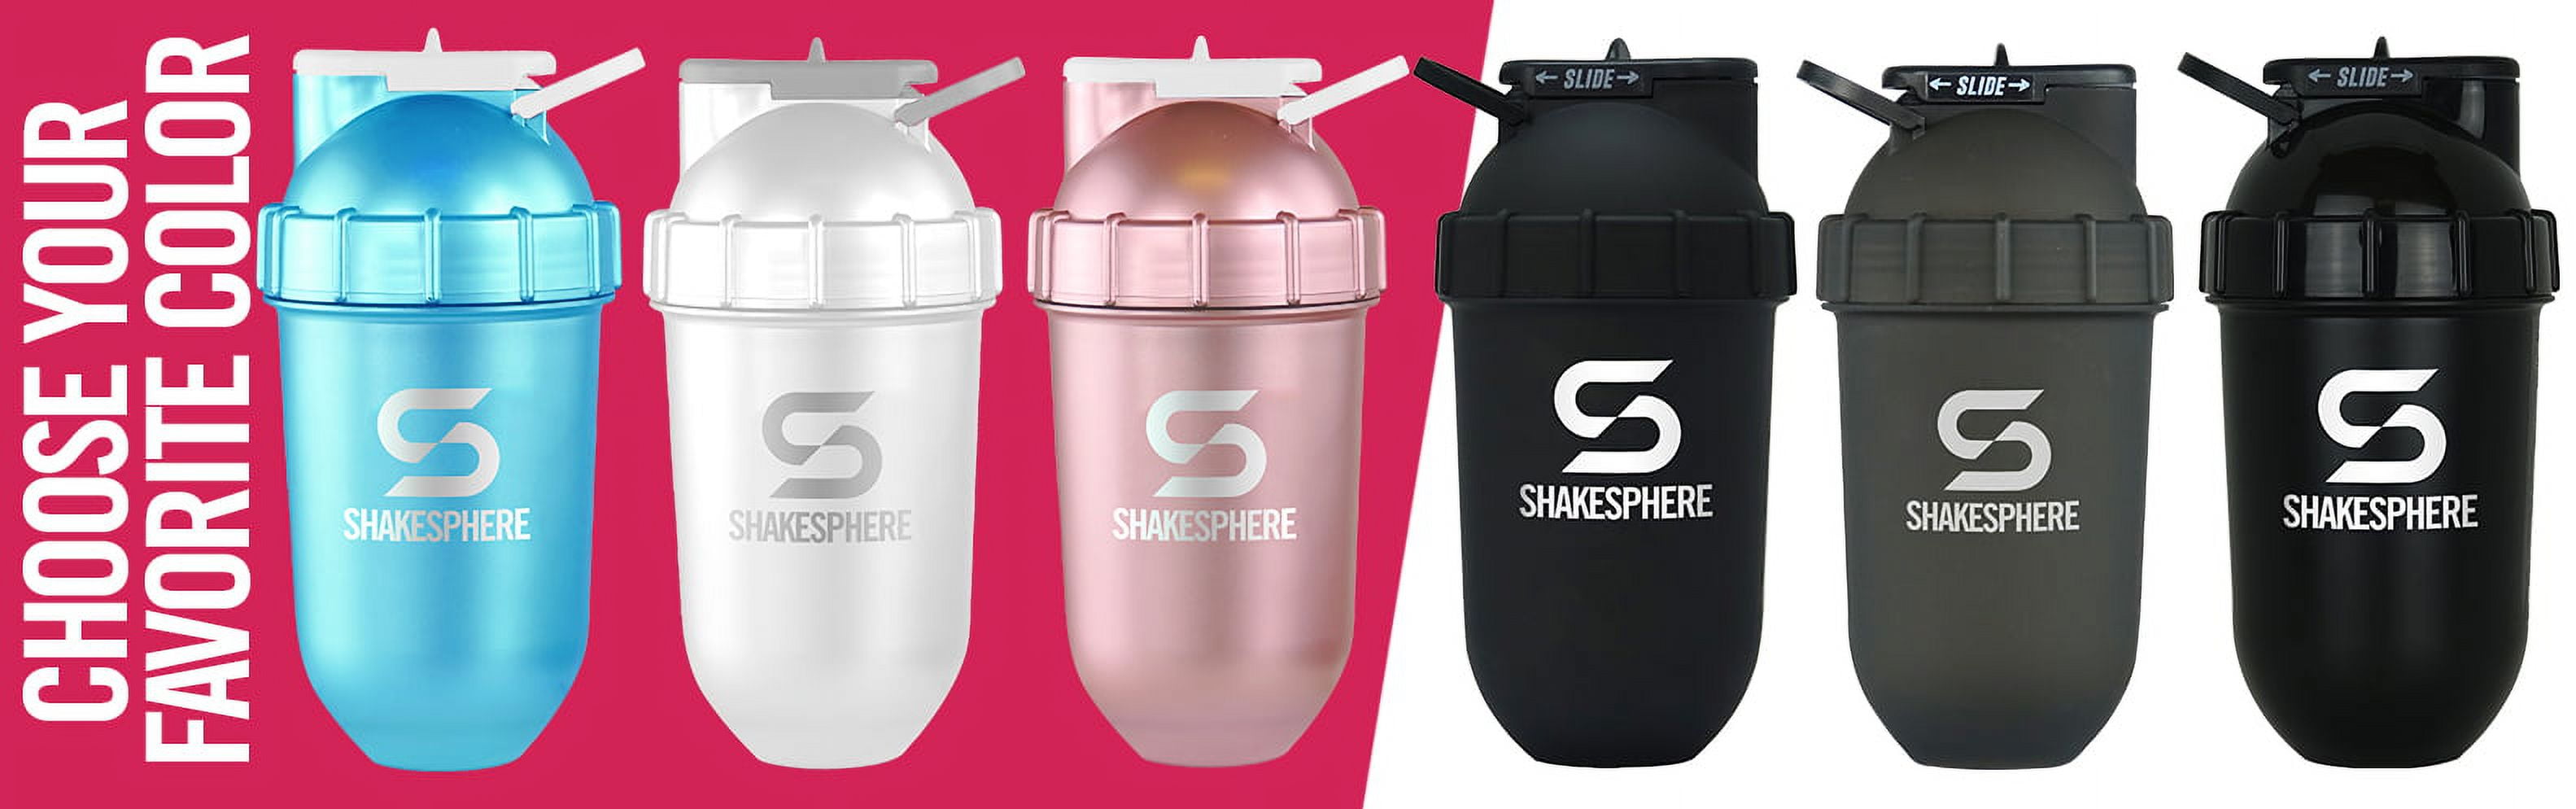 SHAKESPHERE Tumbler Original: Protein Shaker Bottle and Smoothie Cup, 24 oz  - Bladeless Blender Cup, No Blending Ball - Glossy Black - Black Logo